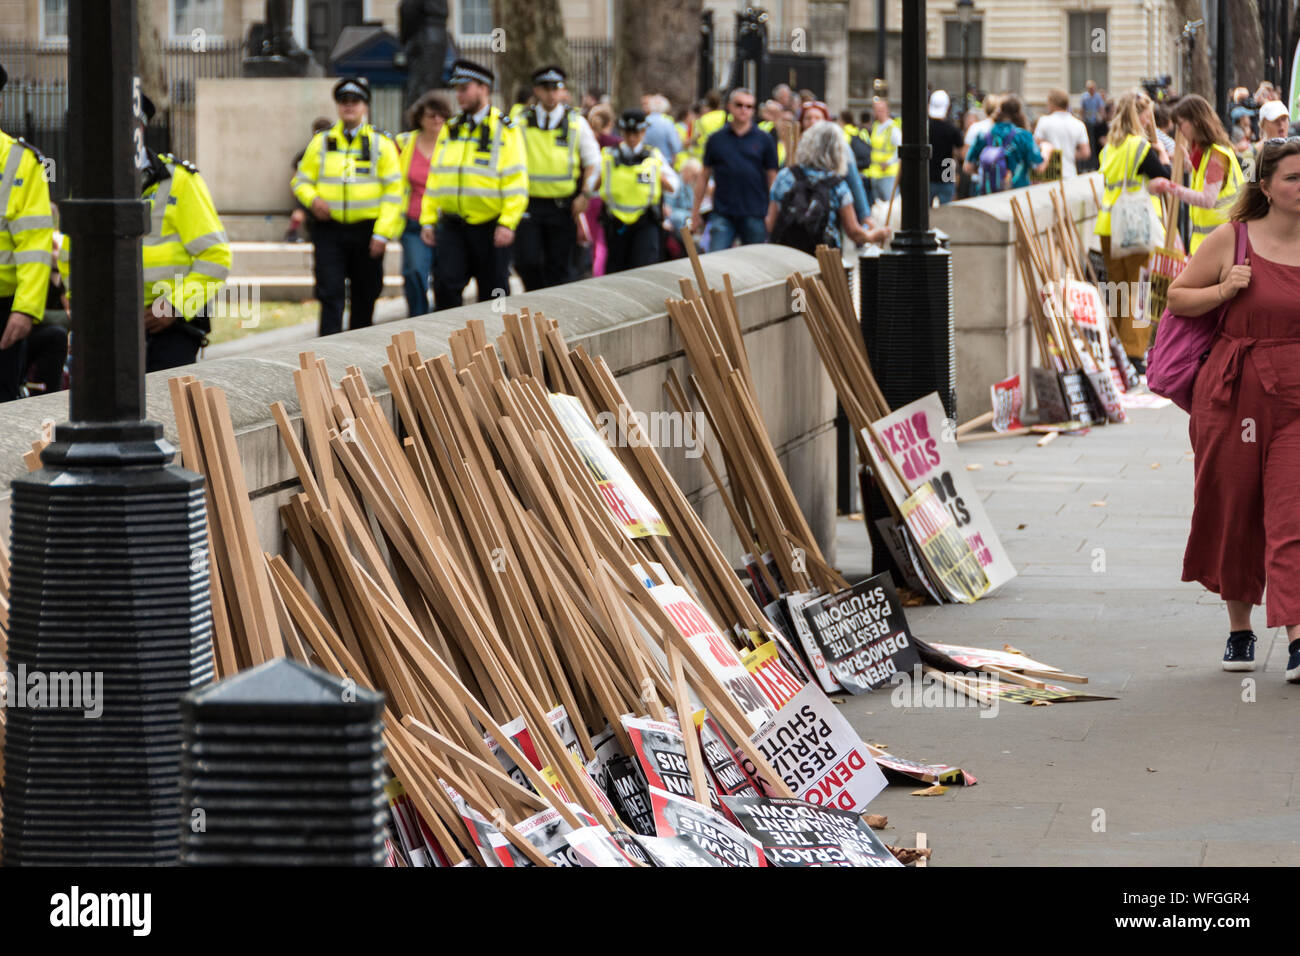 Anti Boris Johnson demonstration in front of Downing Street No 10, 31st Aug 2019, London UK Stock Photo